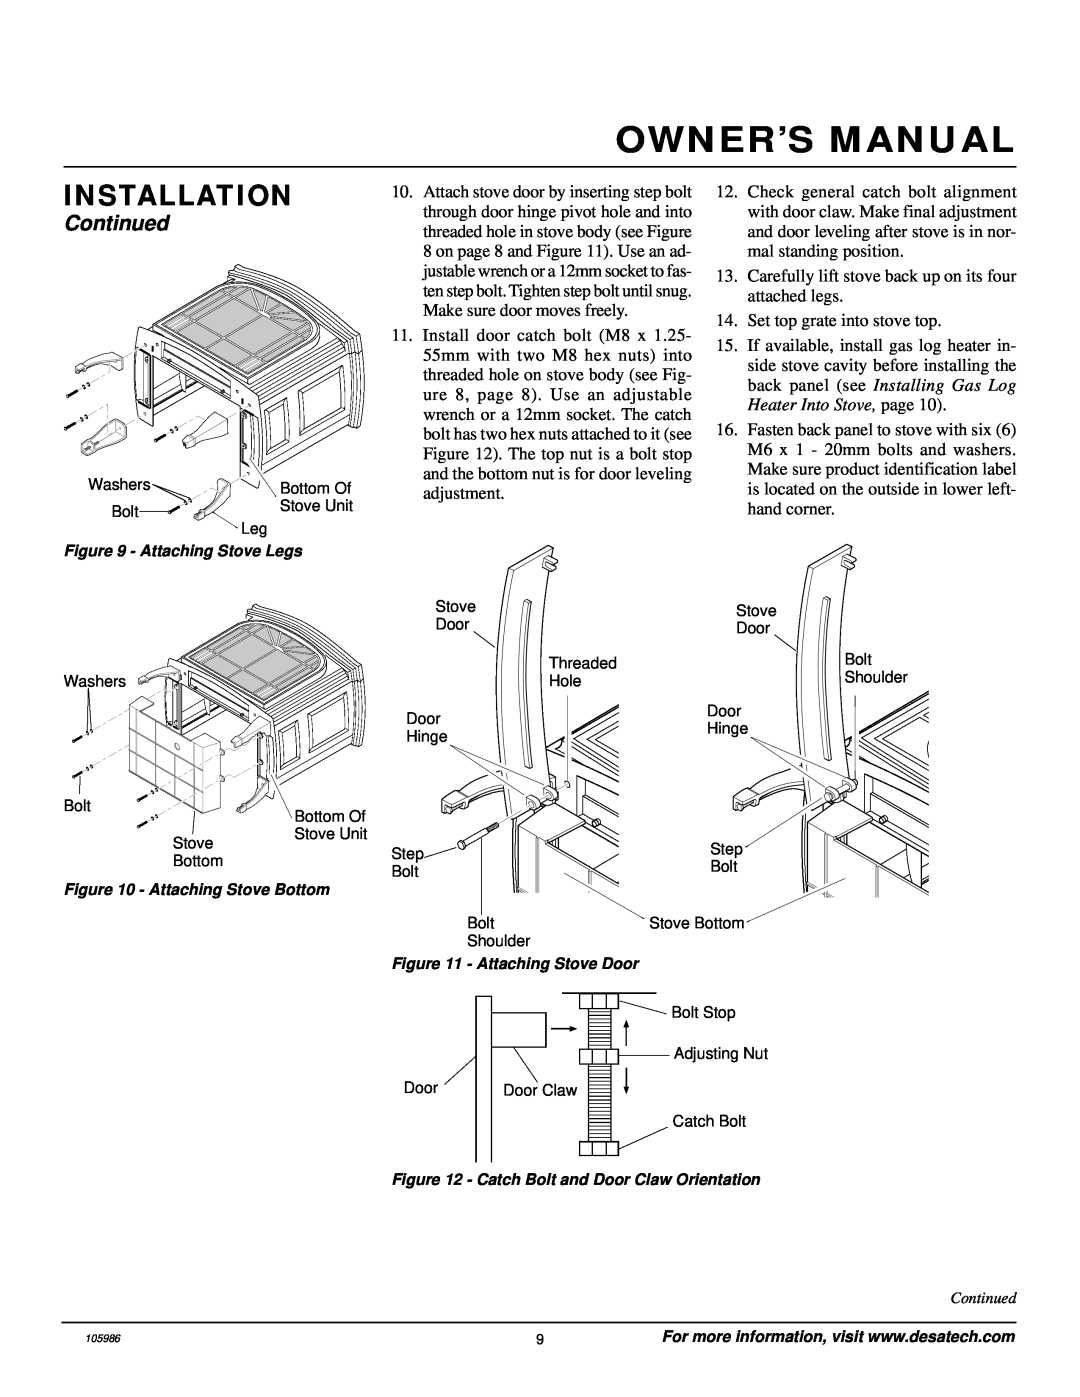 Desa MSVFBP installation manual Installation, Continued, Set top grate into stove top 